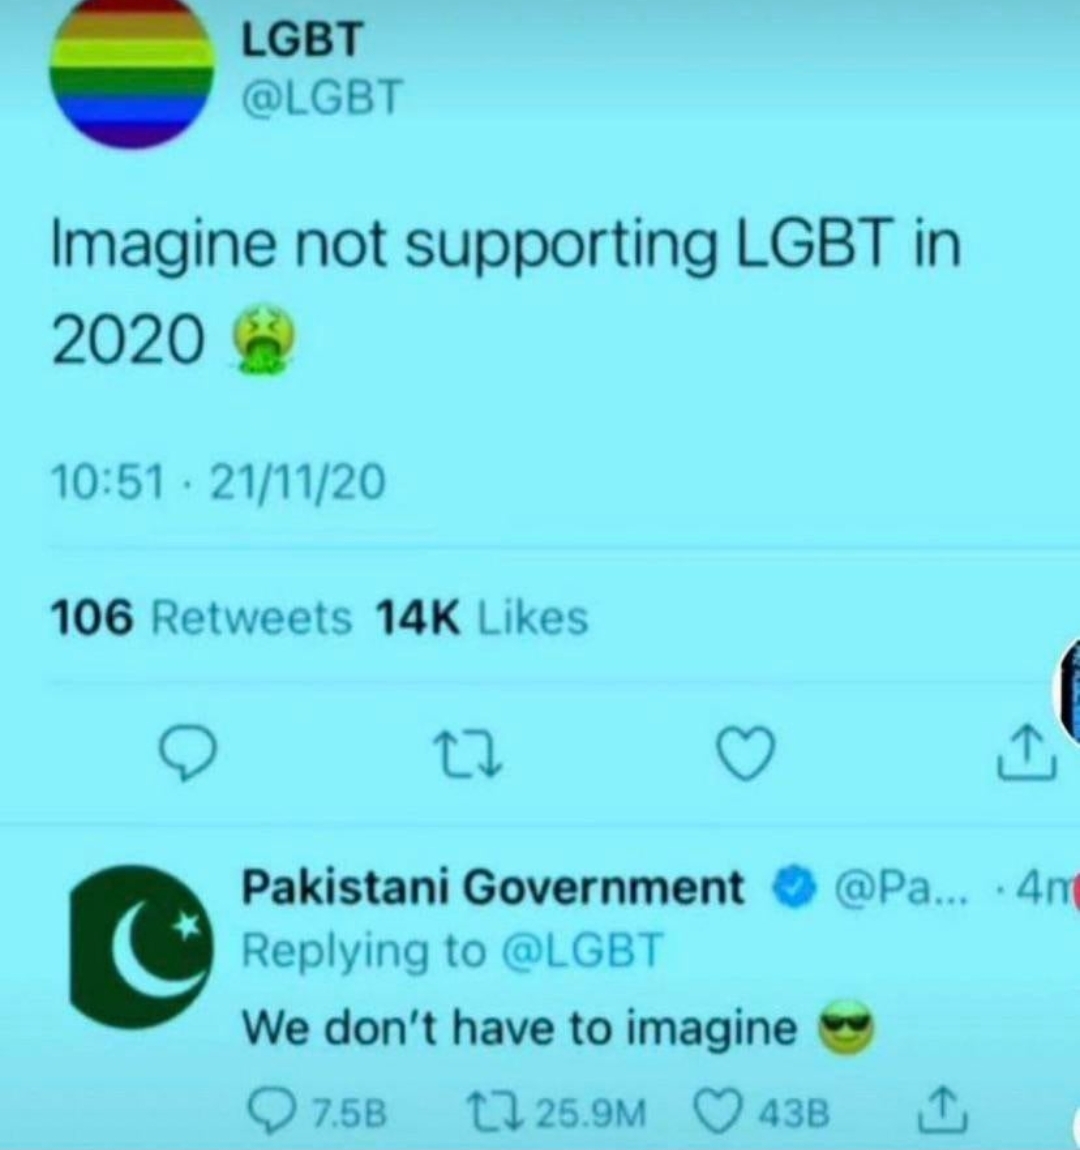 Pakistan - meme